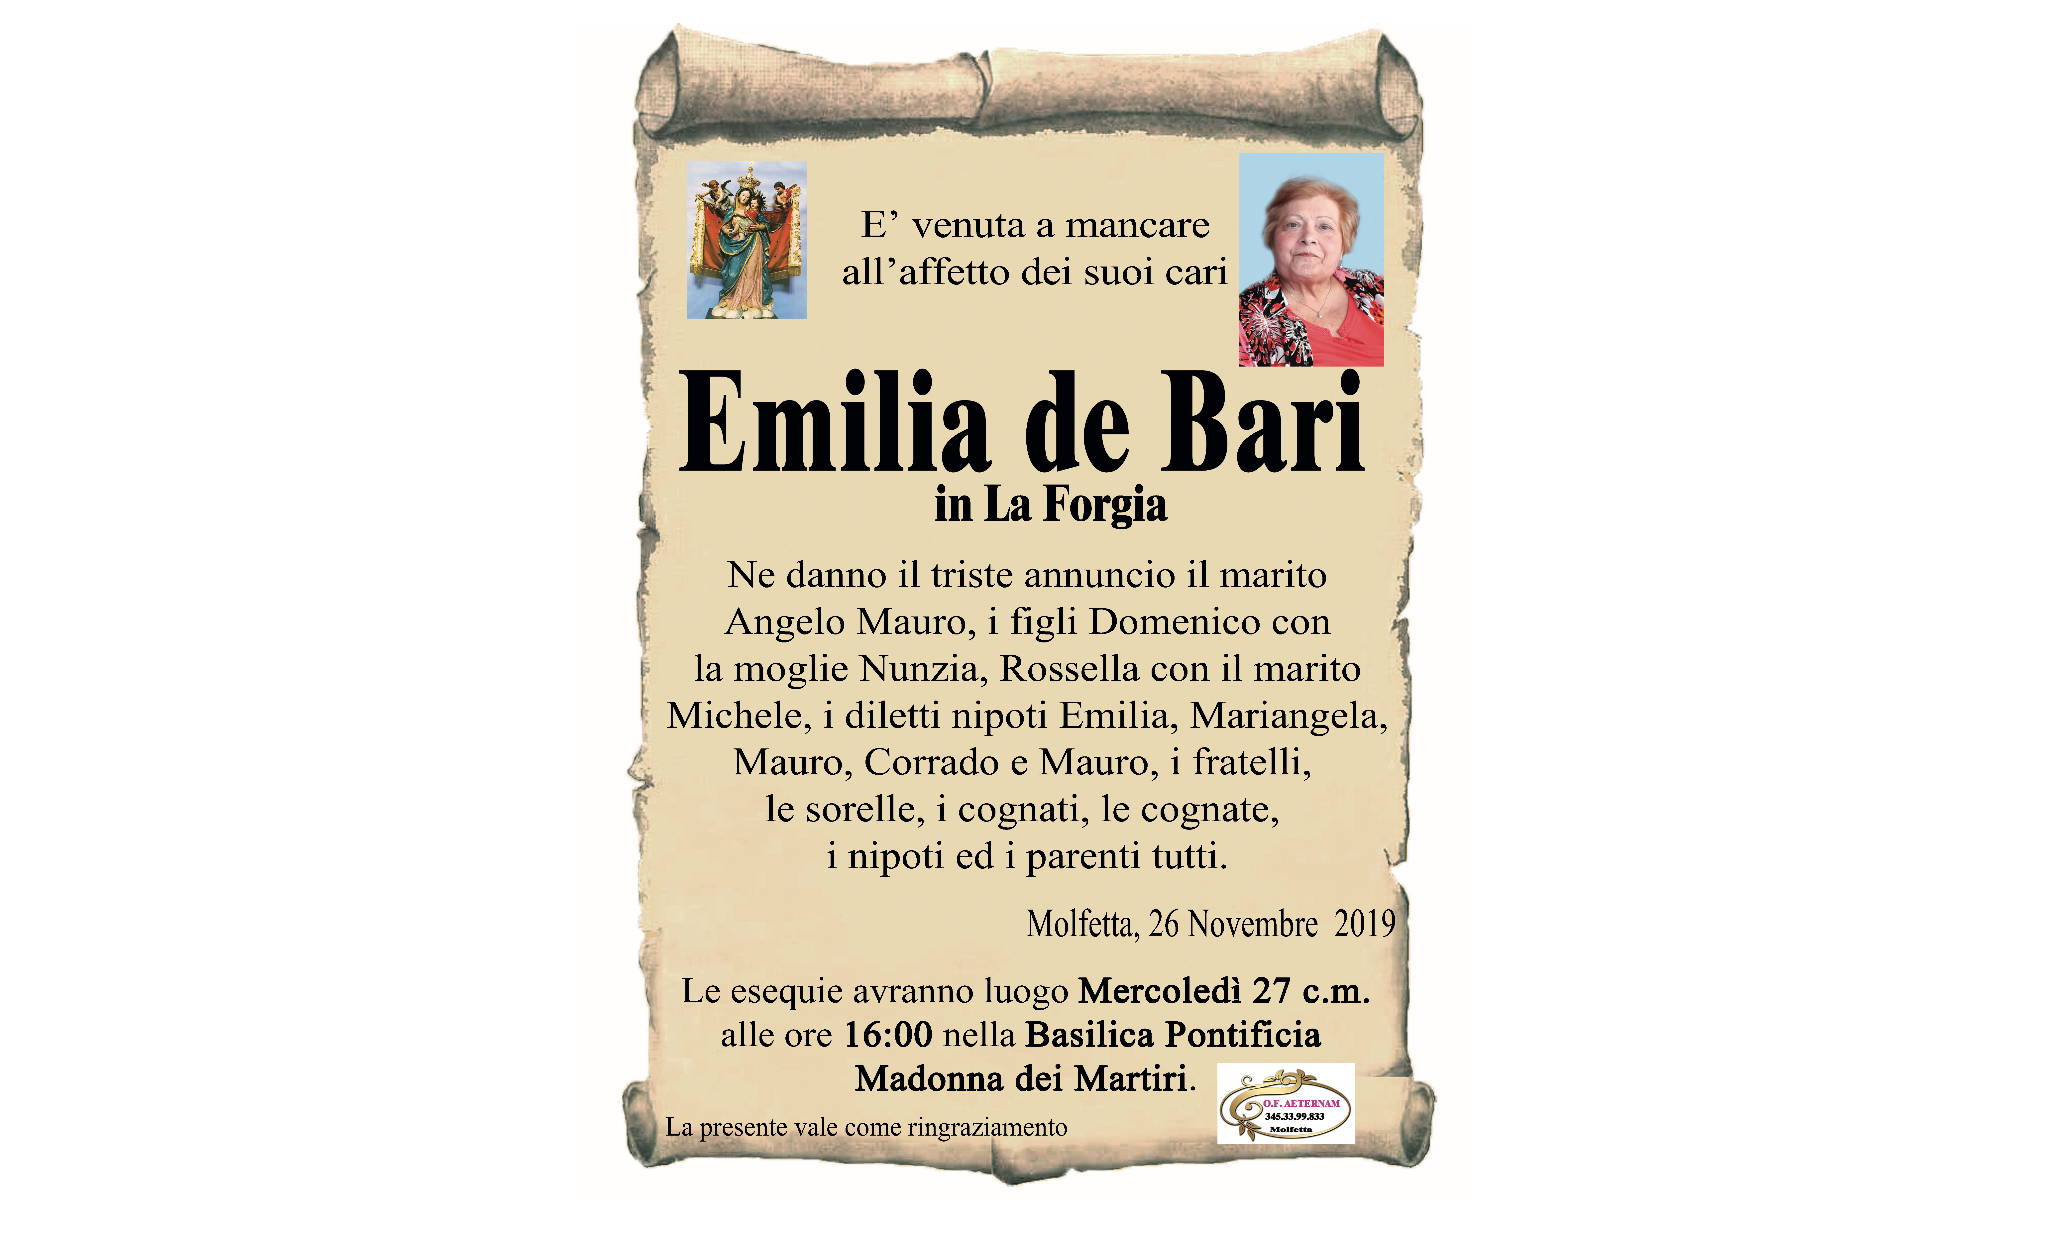 Emilia de Bari